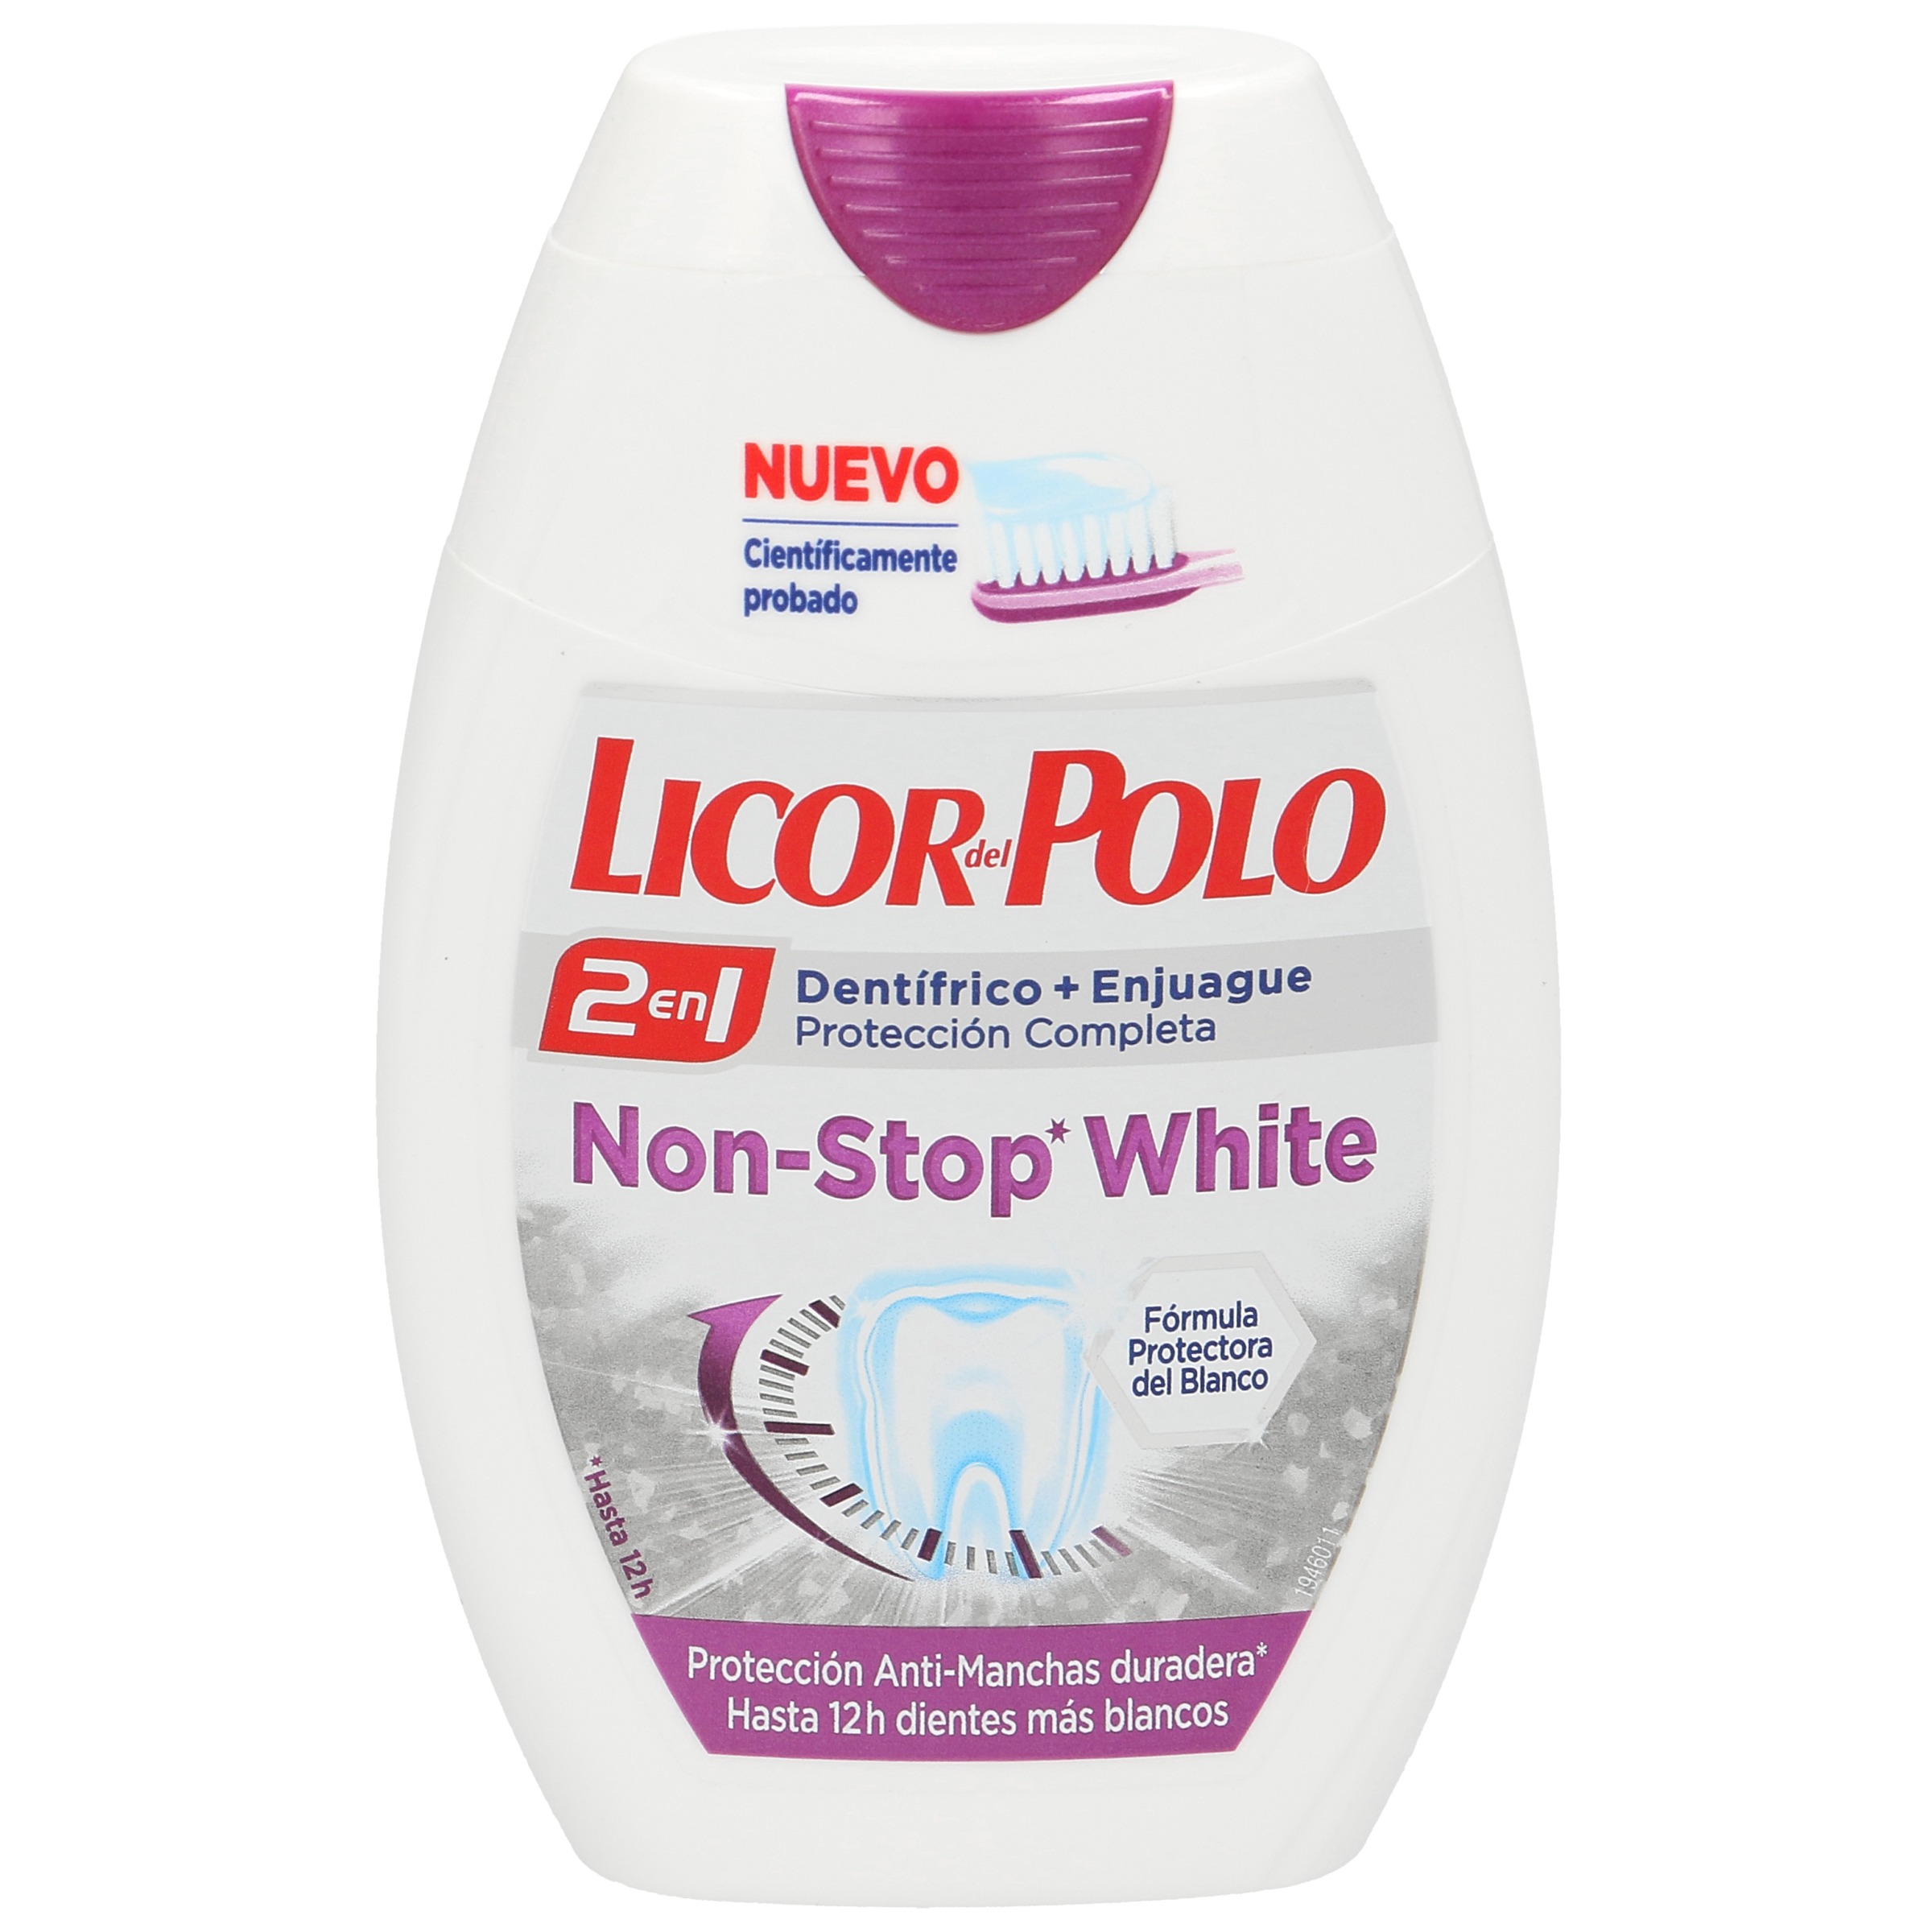 Licor Del Polo Non Stop White